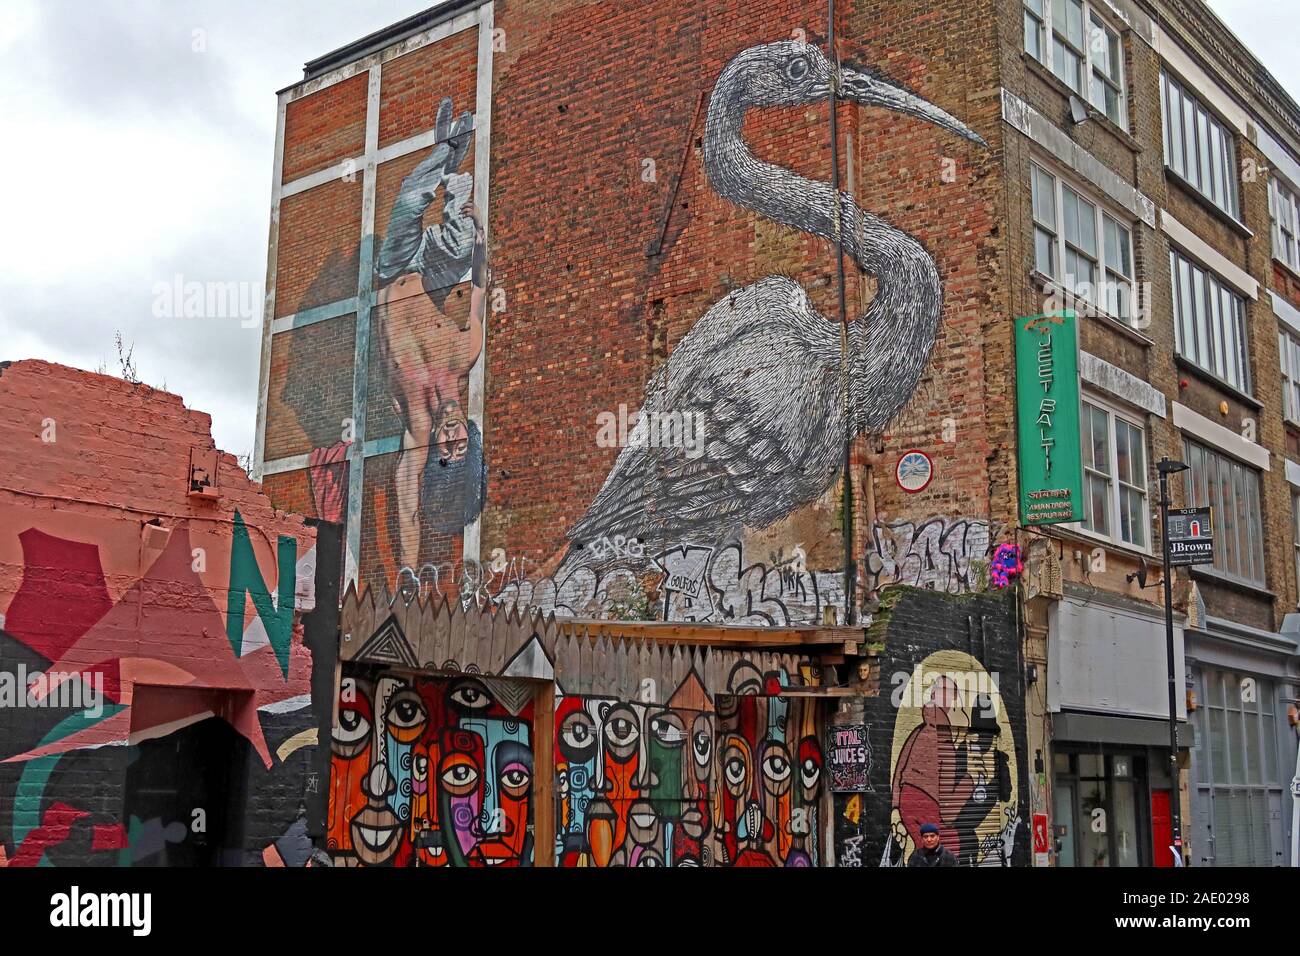 Stork, Hanbury Street, Brick Lane, arte e graffiti, Shoreditch, Tower Hamlets, East End, Londra, Sud Est, Inghilterra, Regno Unito, E1 6QL Foto Stock